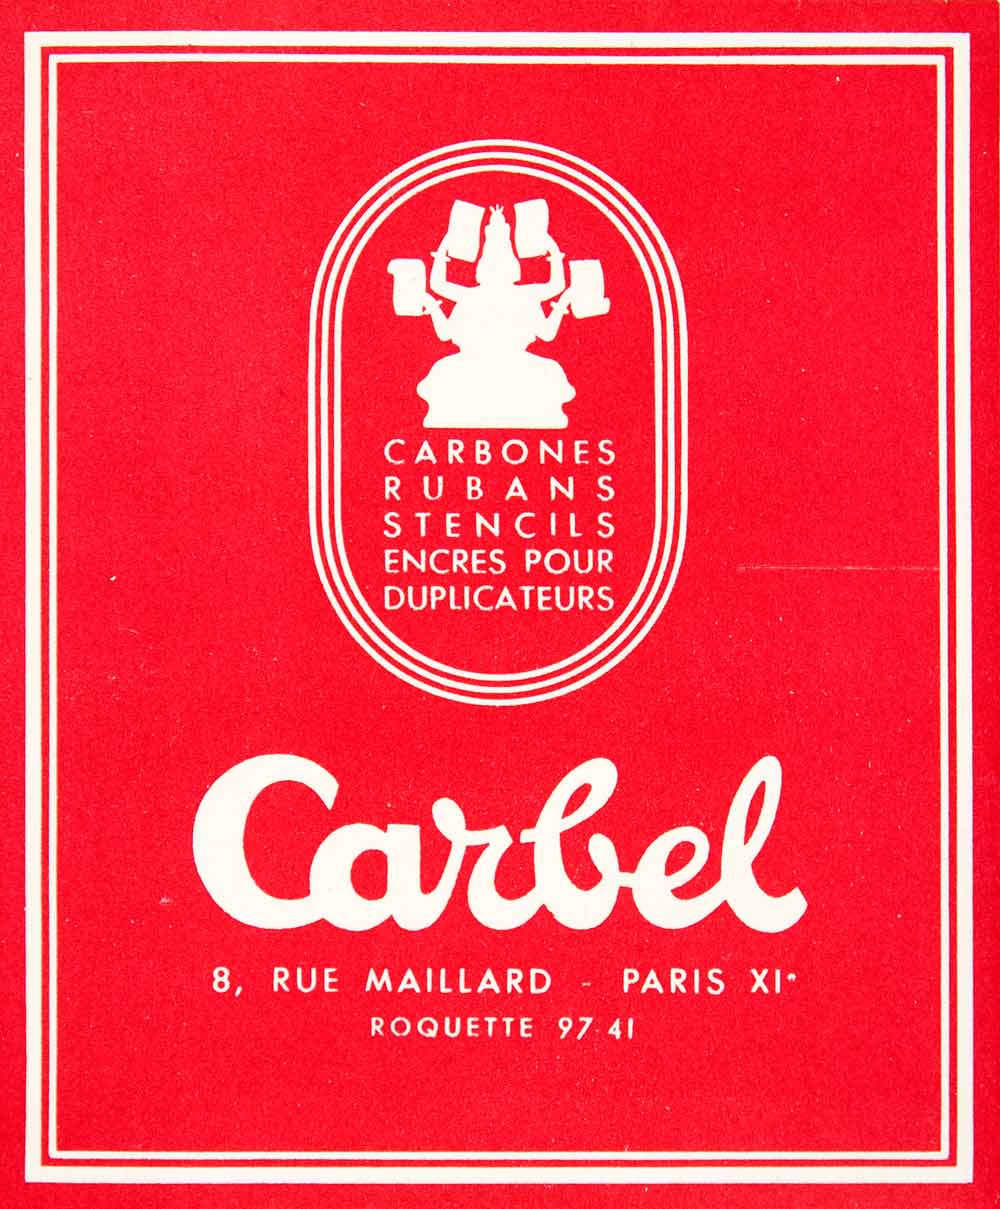 1956 Calendar Prints Carbel 8 Rue Maillard Paris Advertising French Ink VENA2